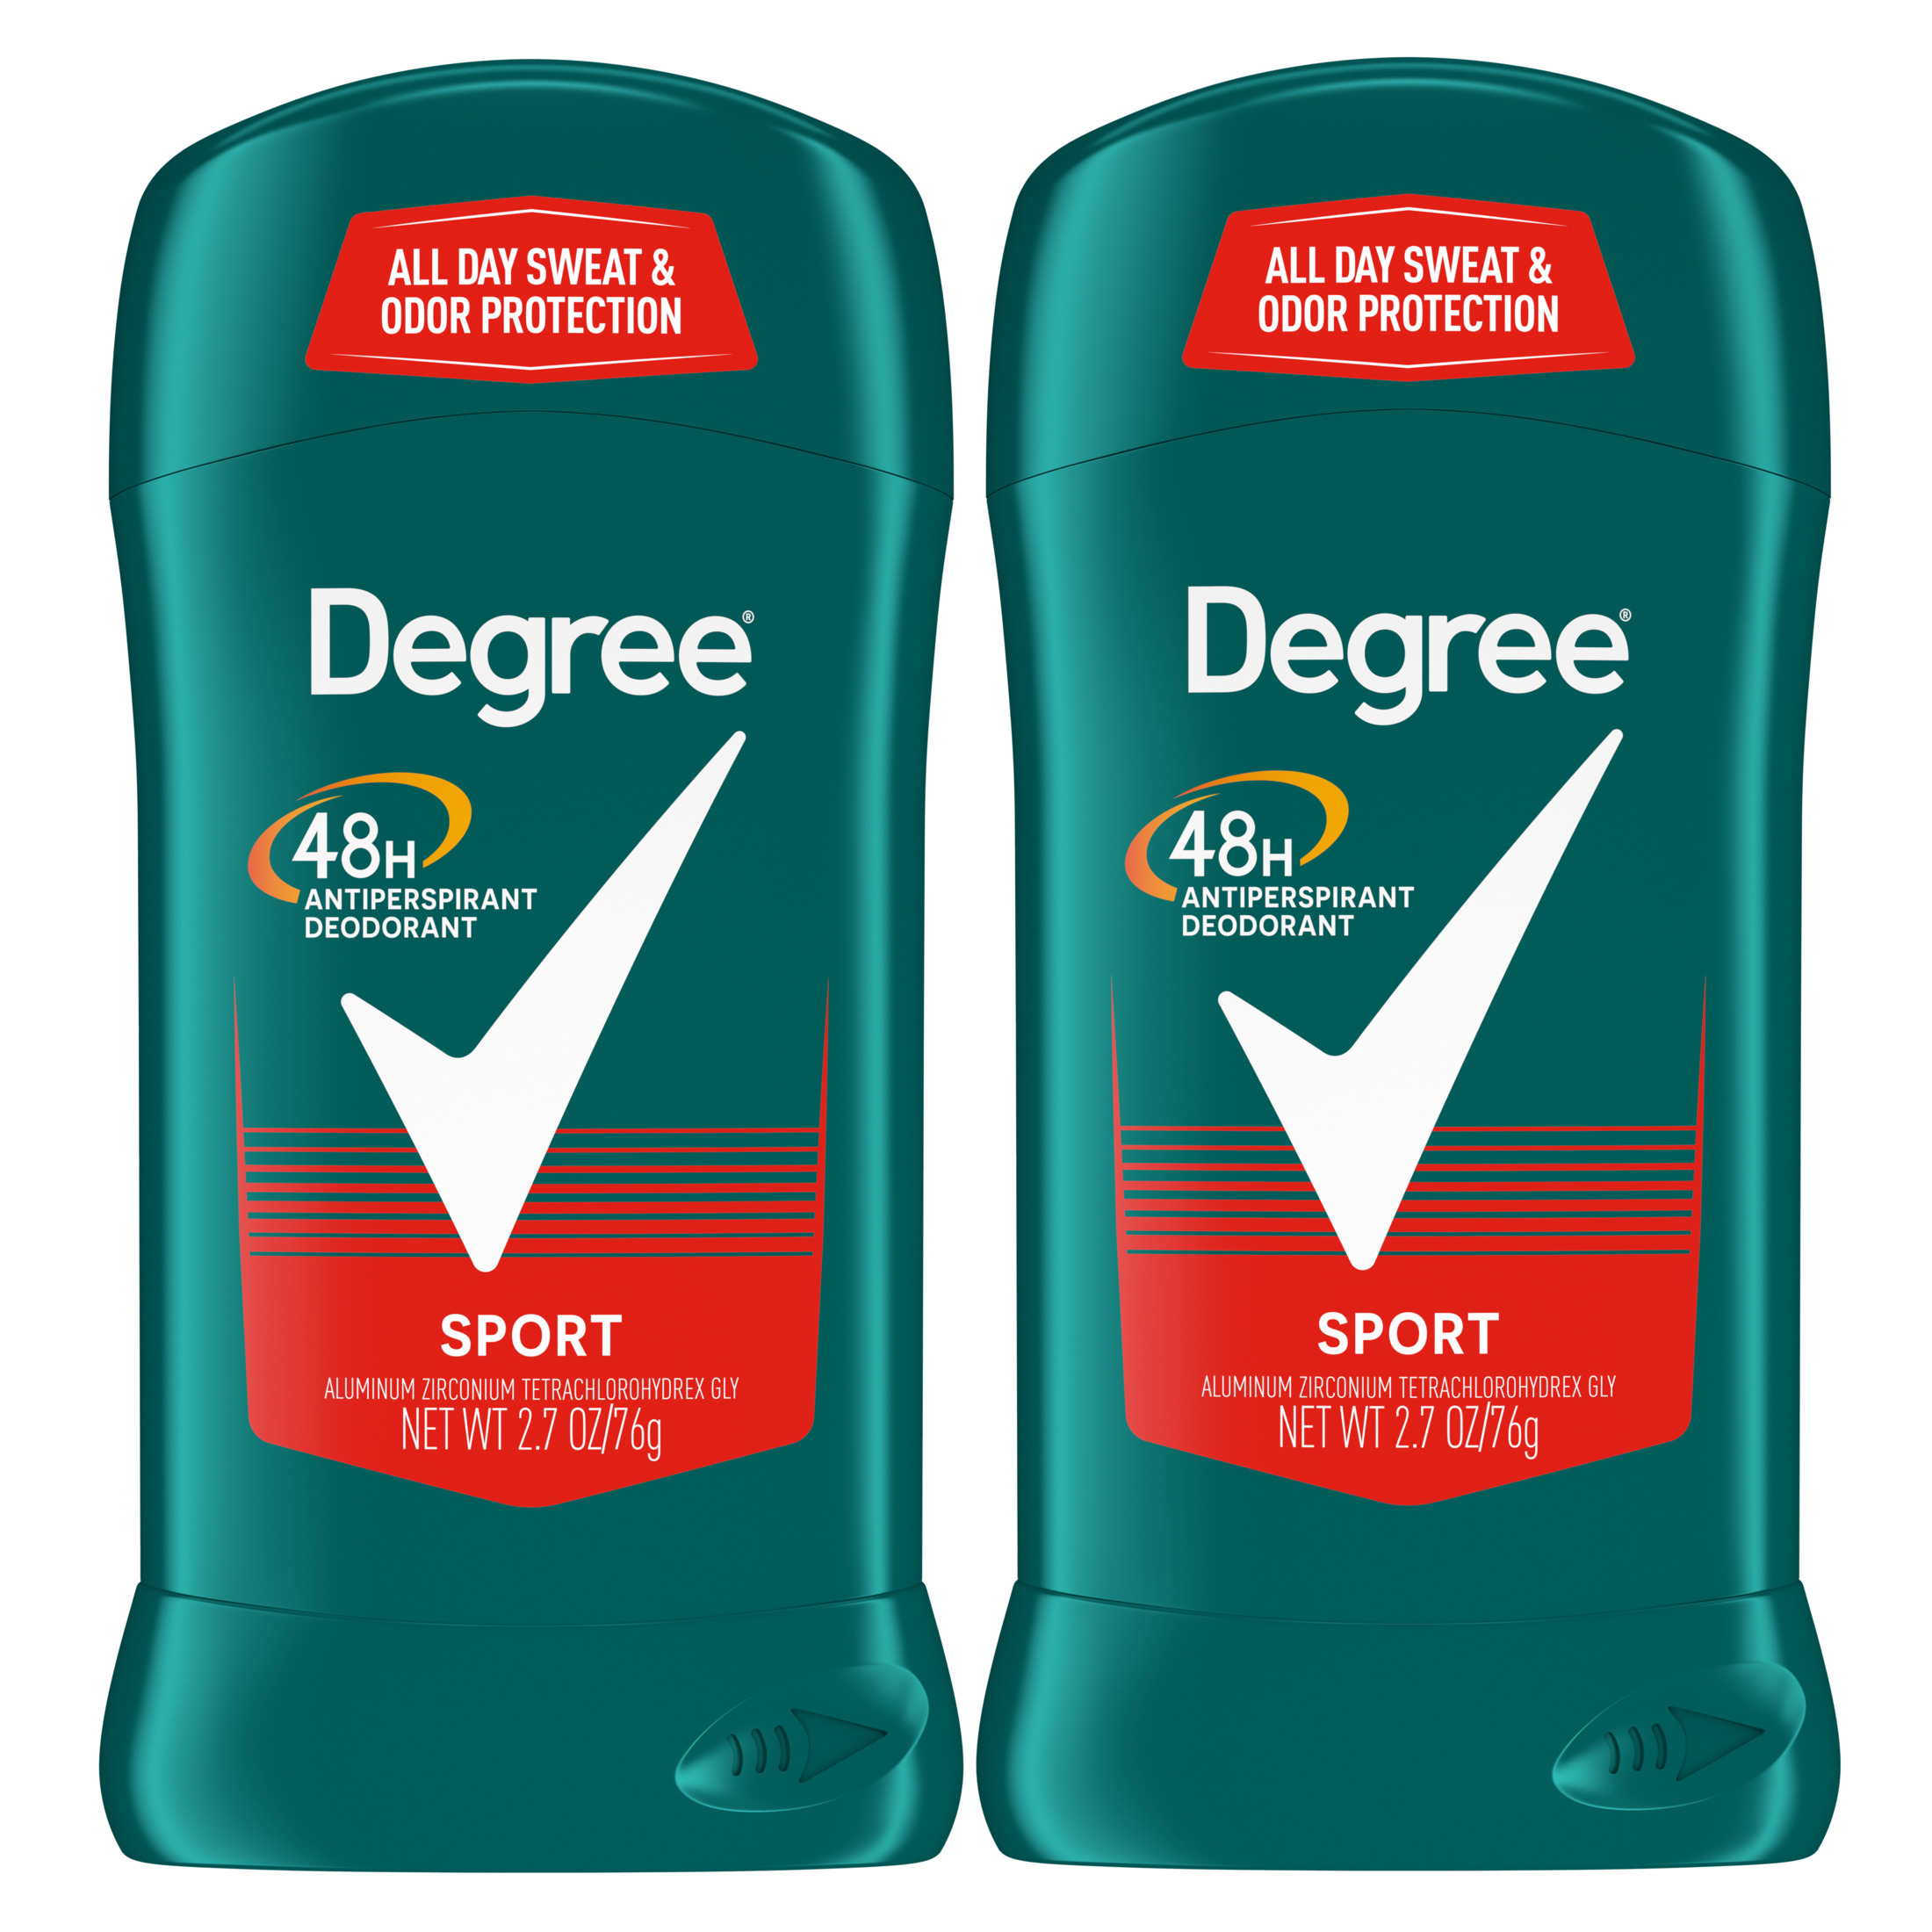 Degree Long Lasting Men's Antiperspirant Deodorant Stick Twin Pack, Sport, 2.7 oz - image 1 of 9